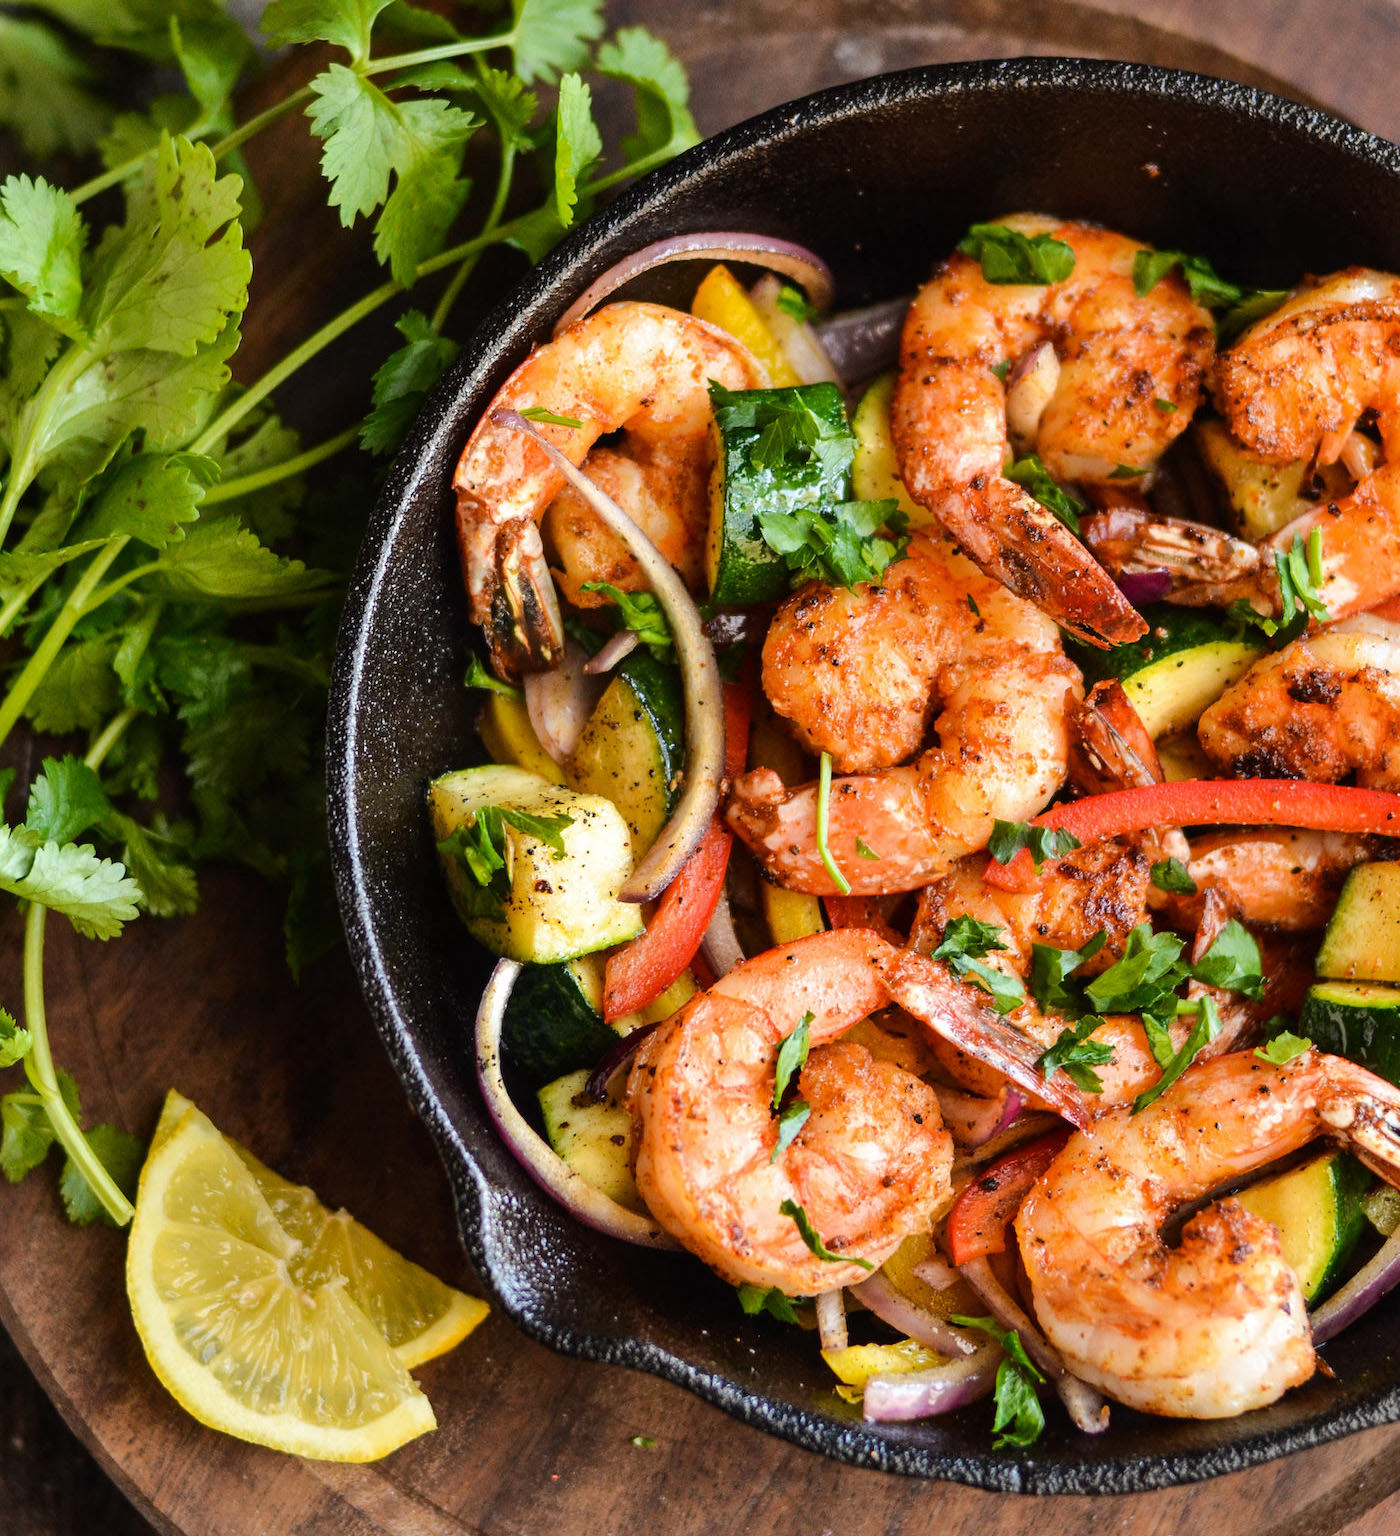 Shrimp and Vegetables recipe